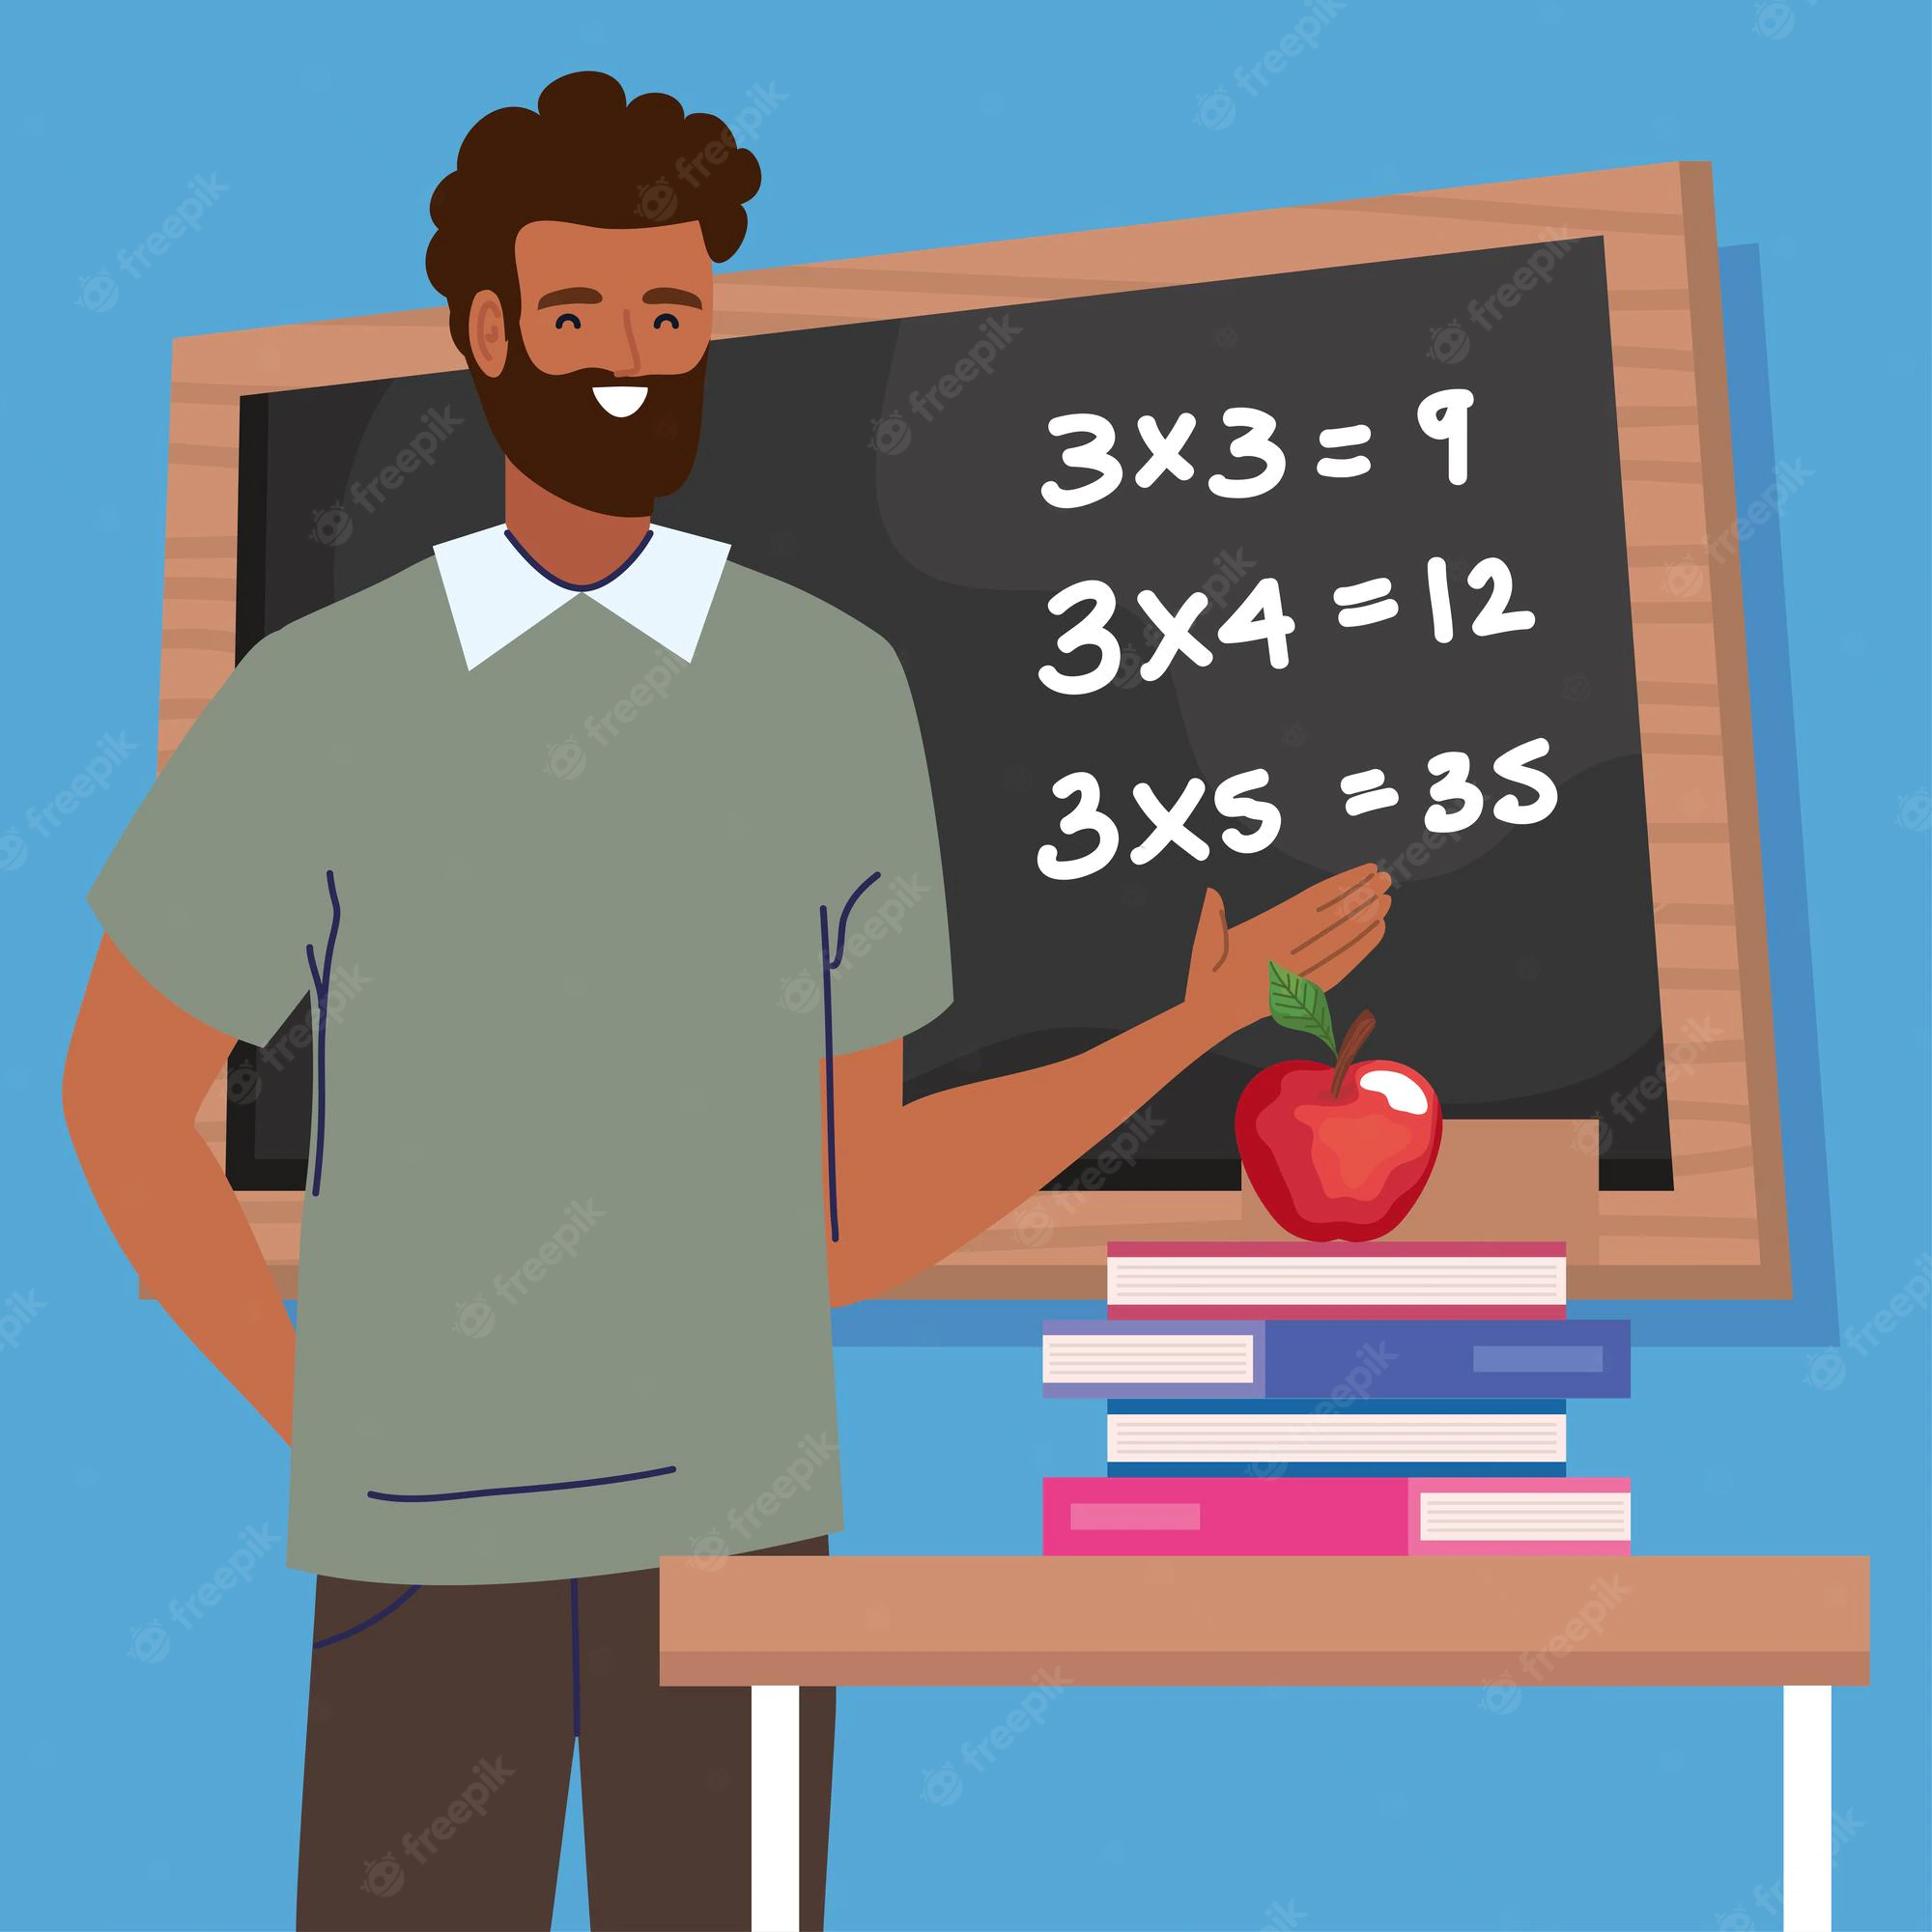 مدرس رياضيات خصوصي بالكويت 65050912-تدريس رياضيات-رقم مدرس رياضيات -ارقام مدرسين رياضيات- دروس رياضيات